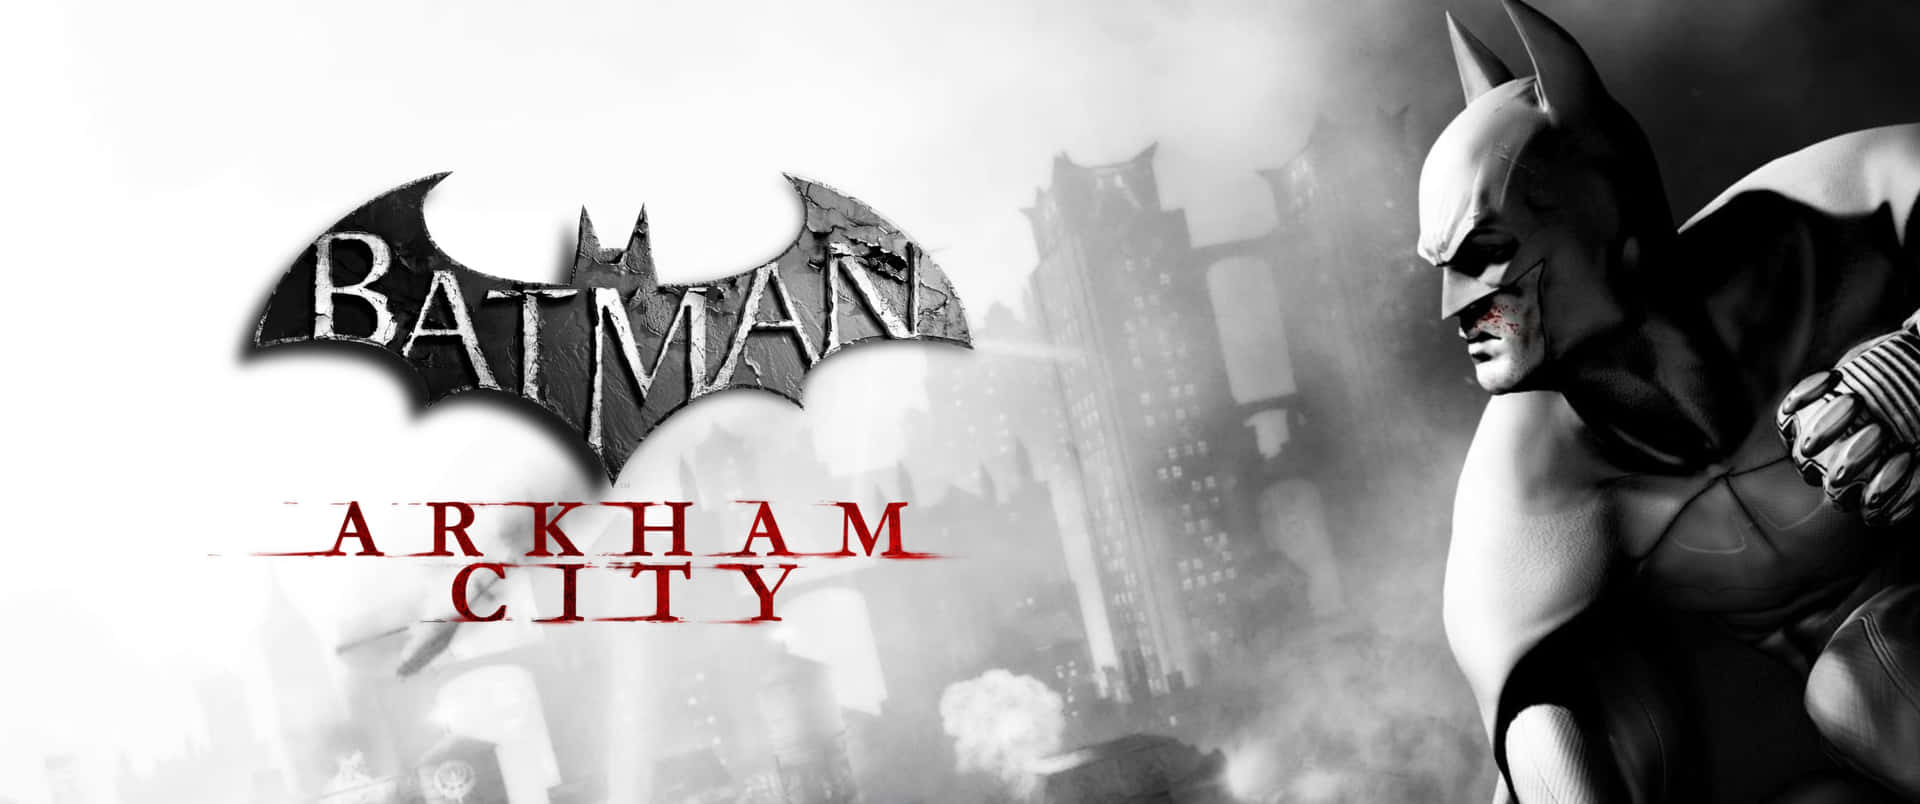 Batmanestá De Vuelta En Acción En Arkham City.